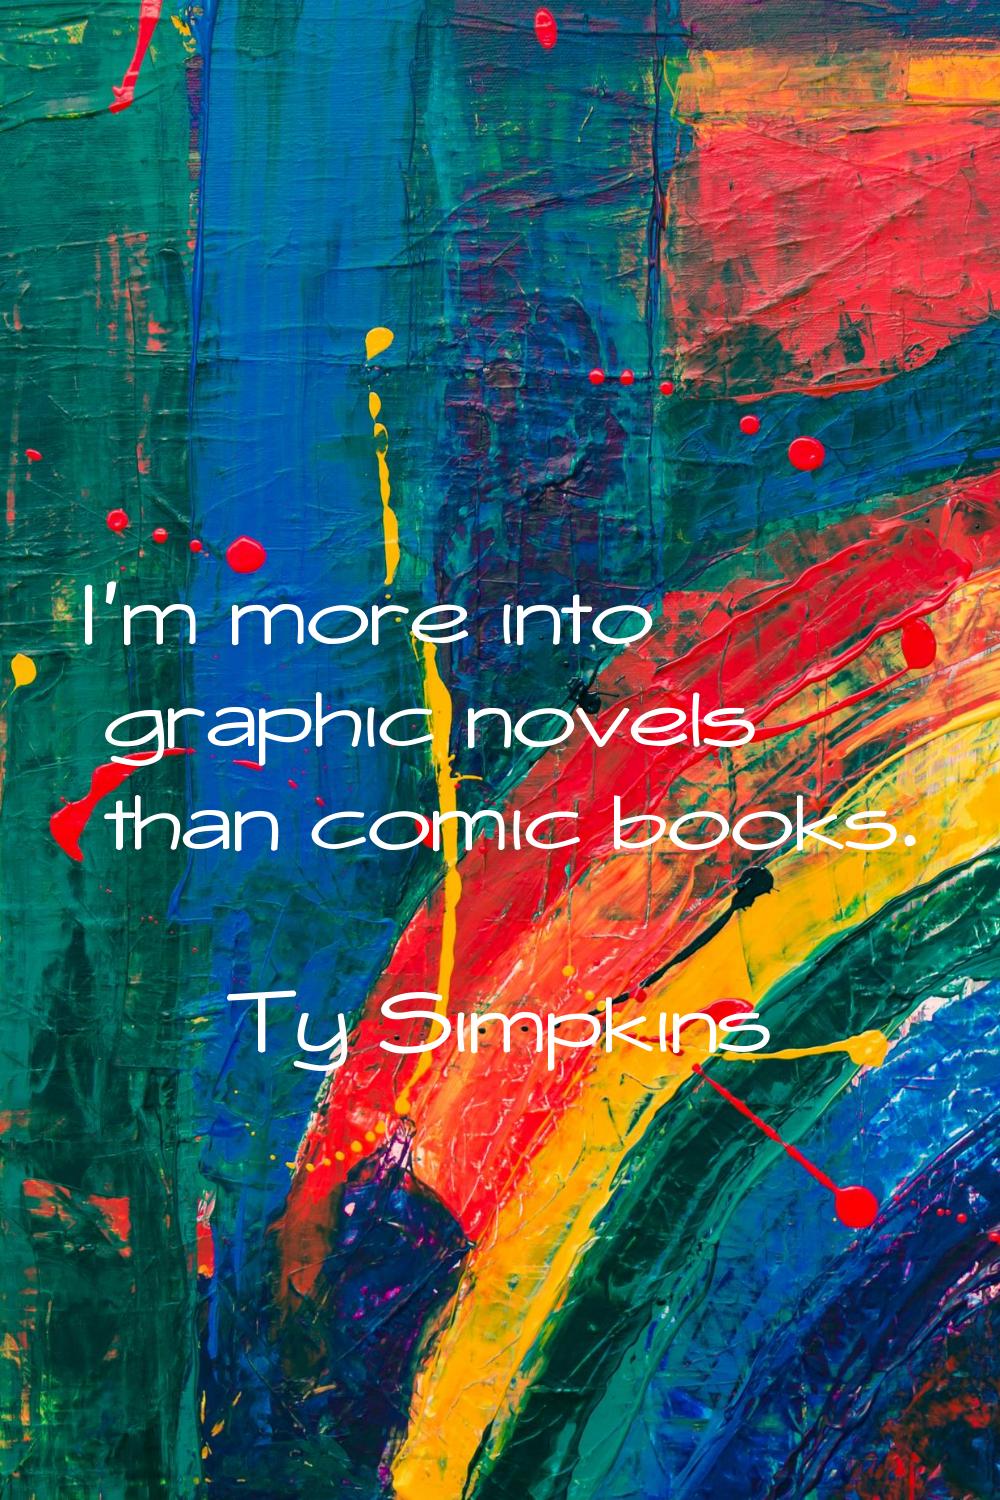 I'm more into graphic novels than comic books.